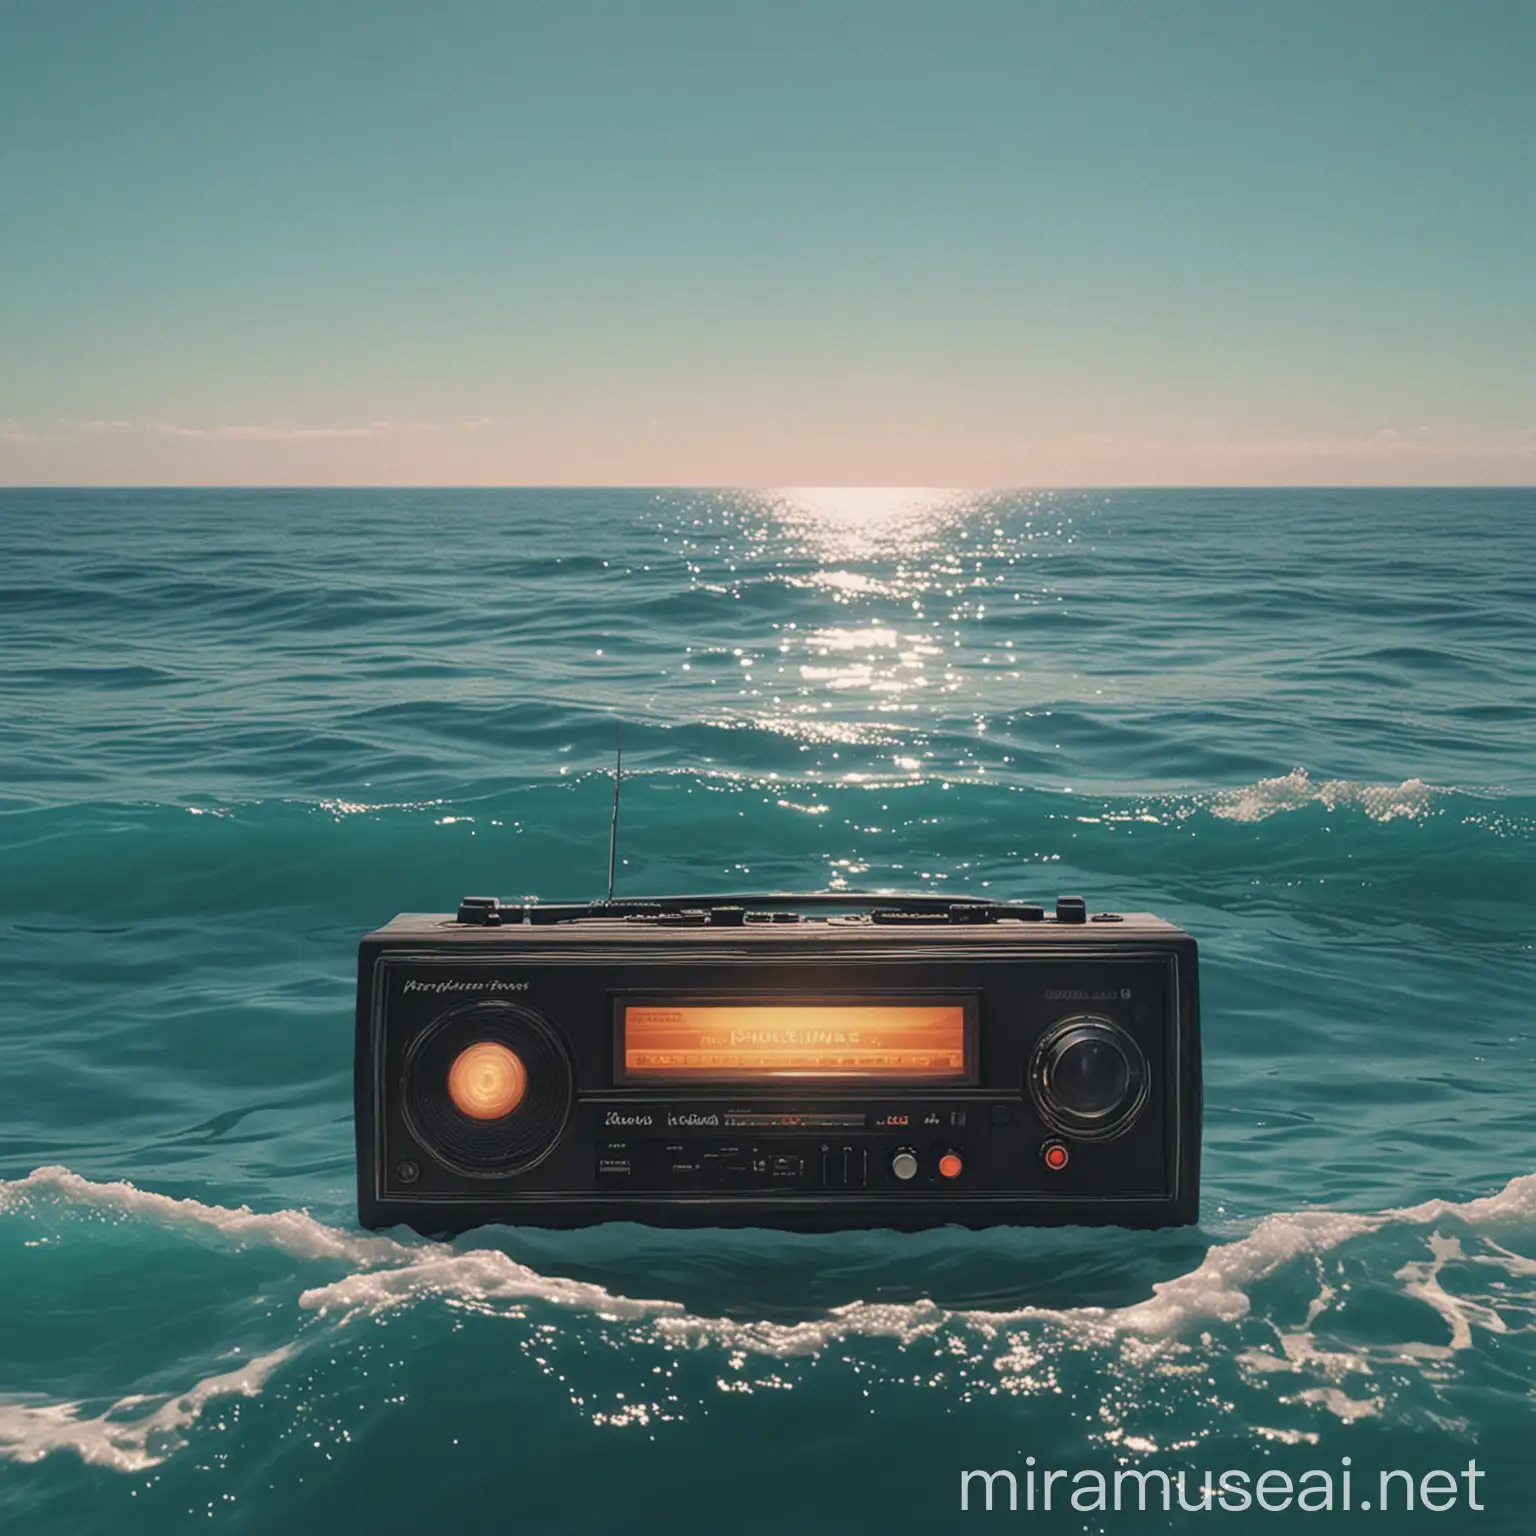 Hyperrealistic Radiowaves Blending into Aqua Blue Ocean